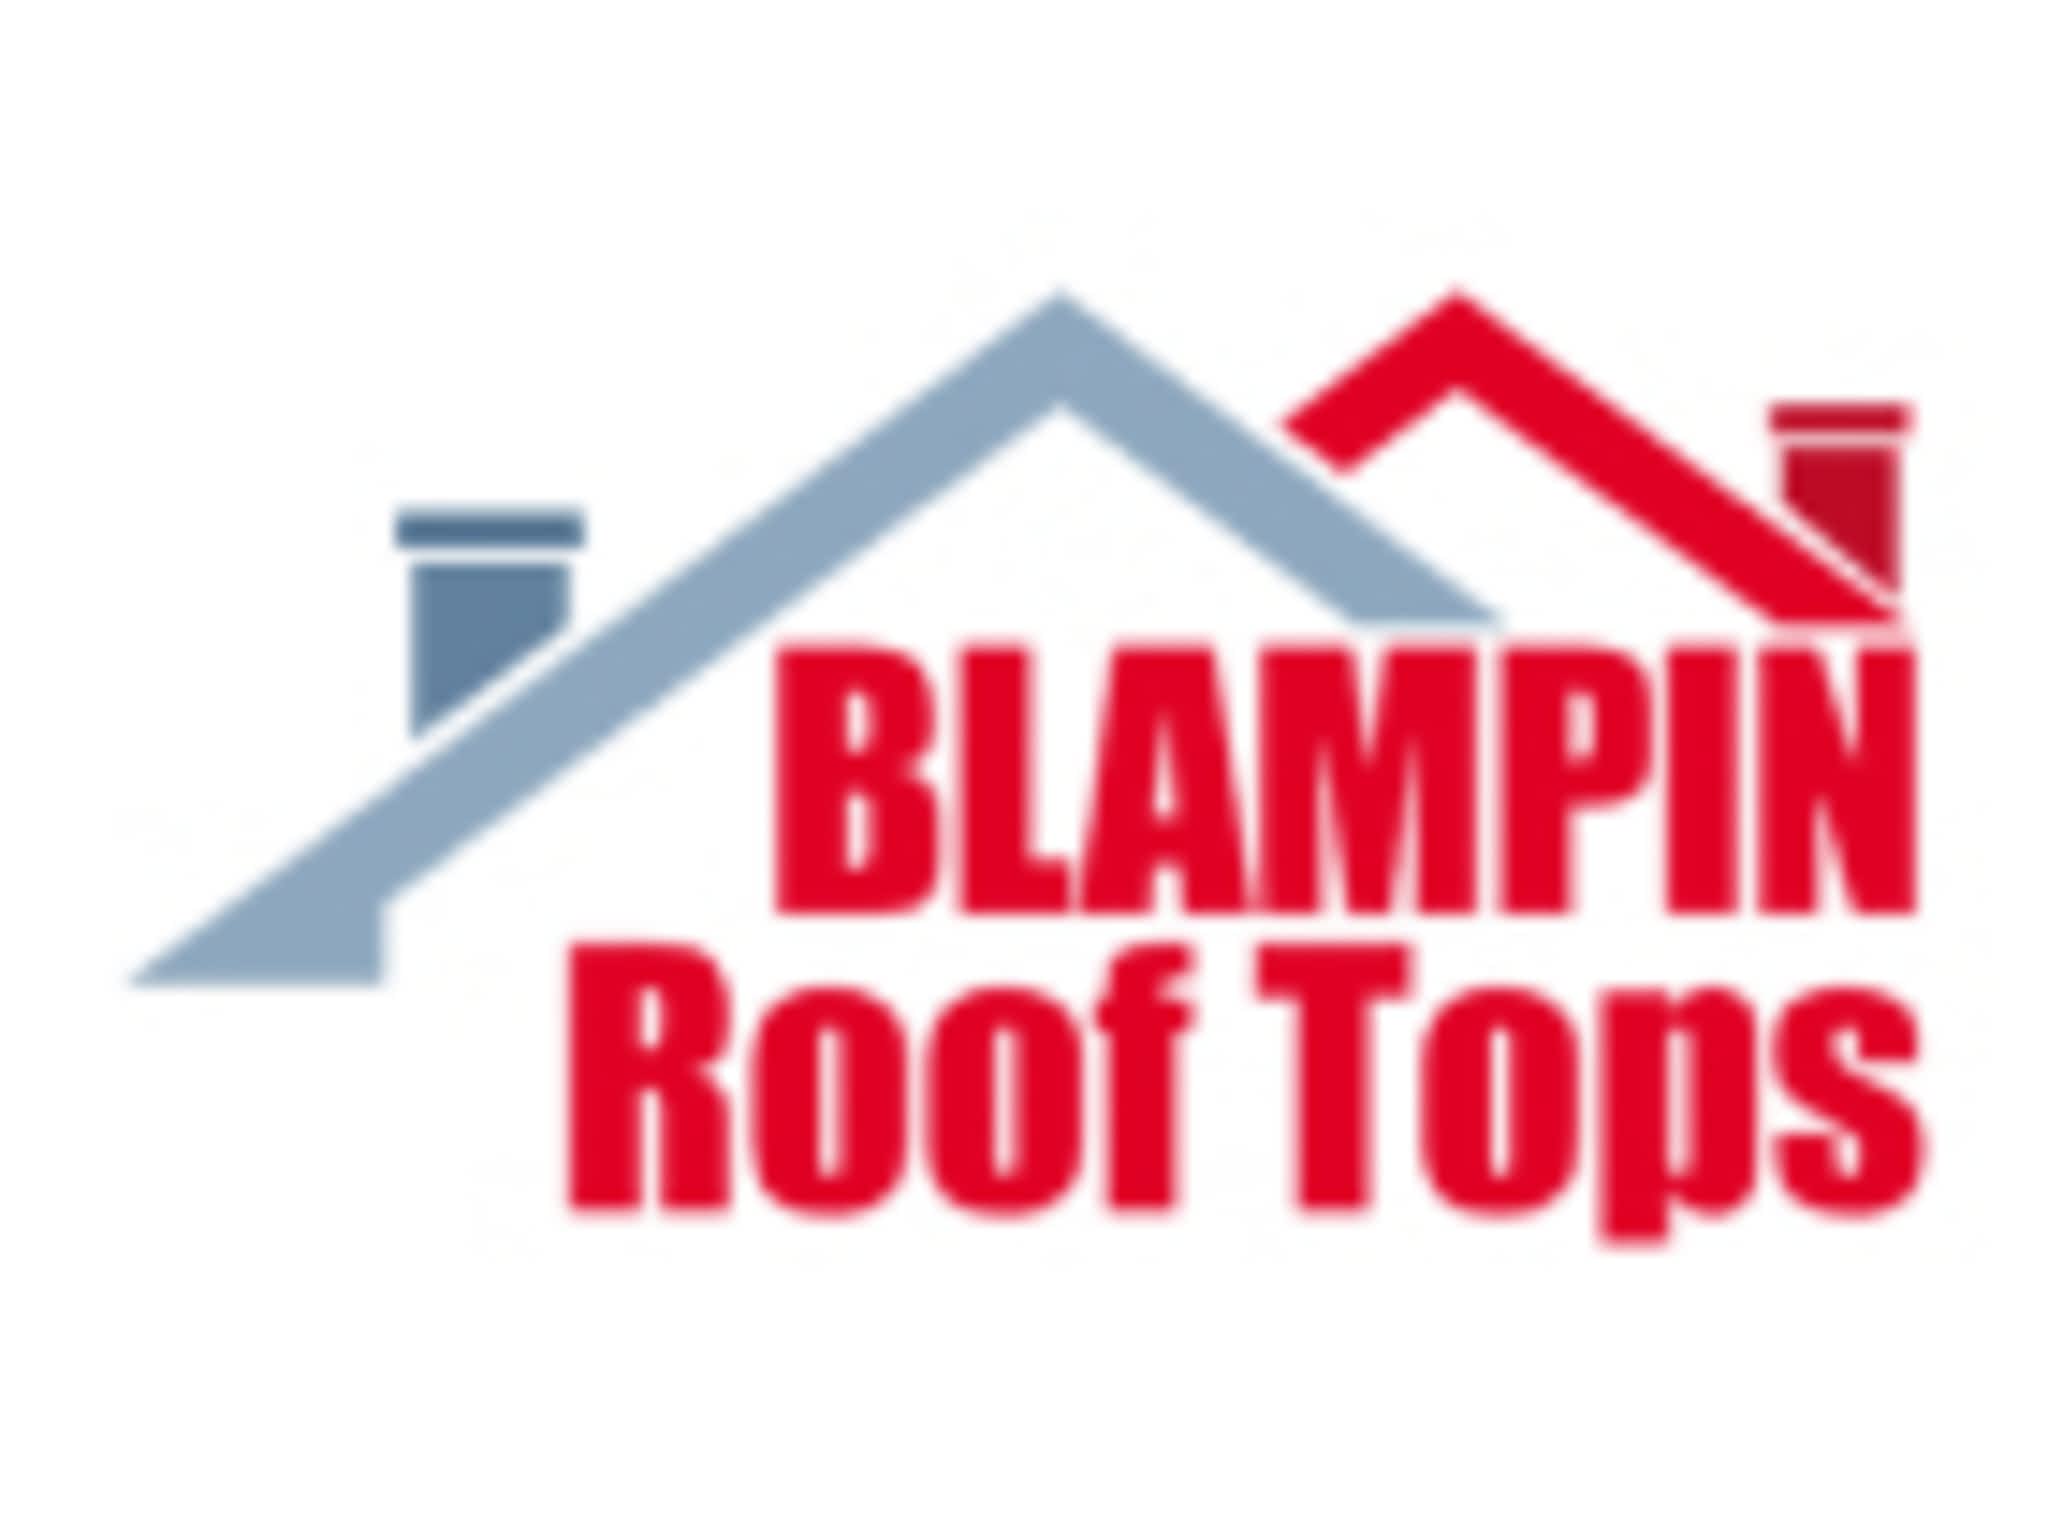 photo Blampin Roof Tops